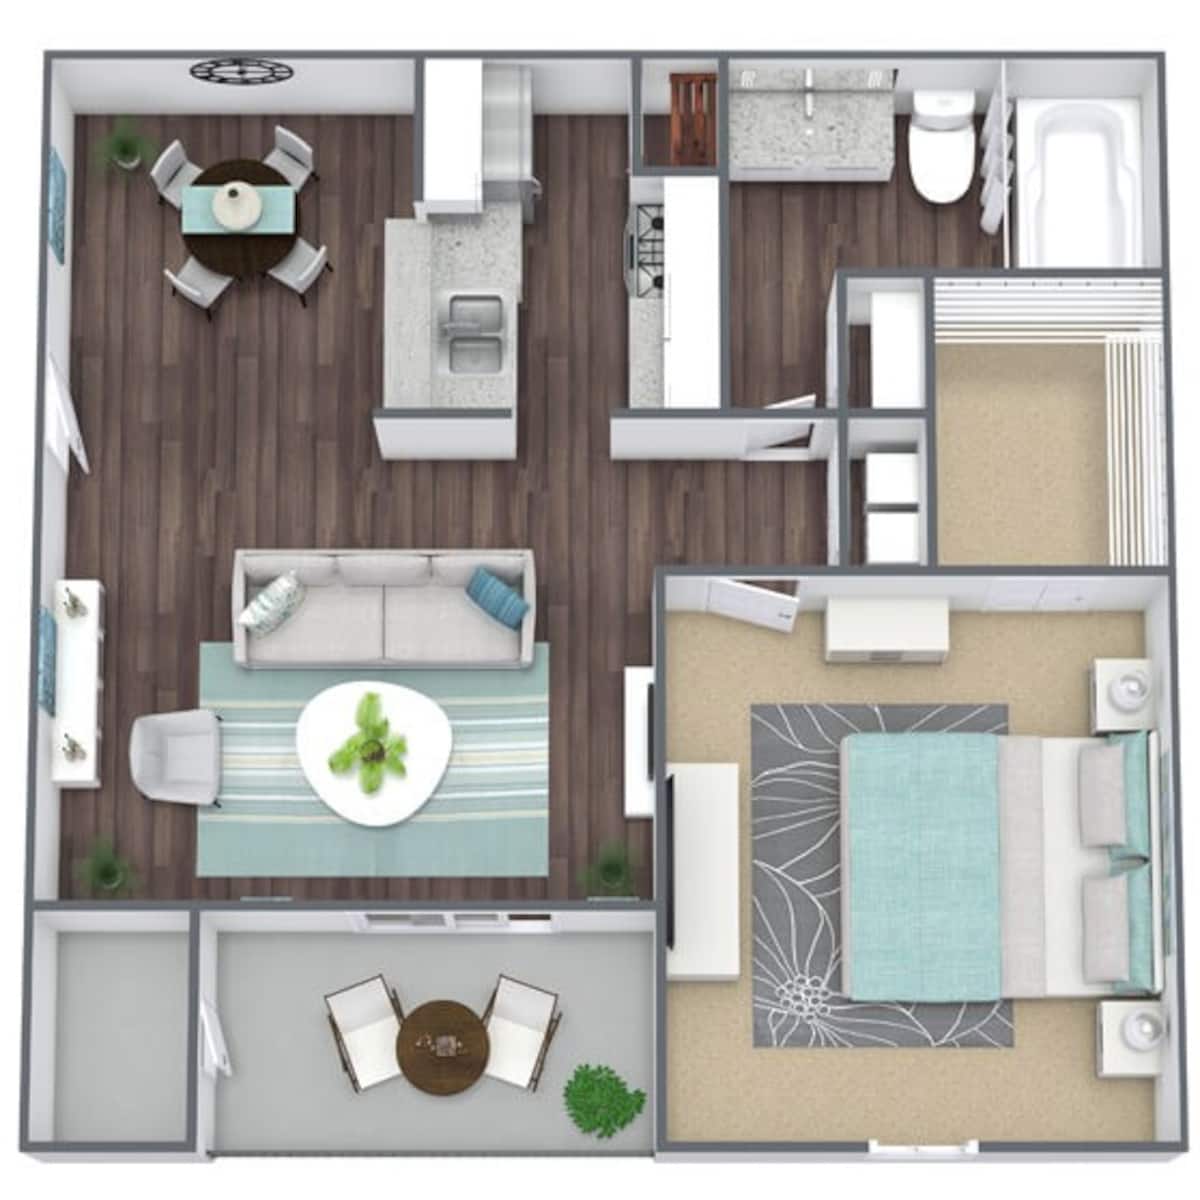 Floorplan diagram for Hyde Park, showing 1 bedroom